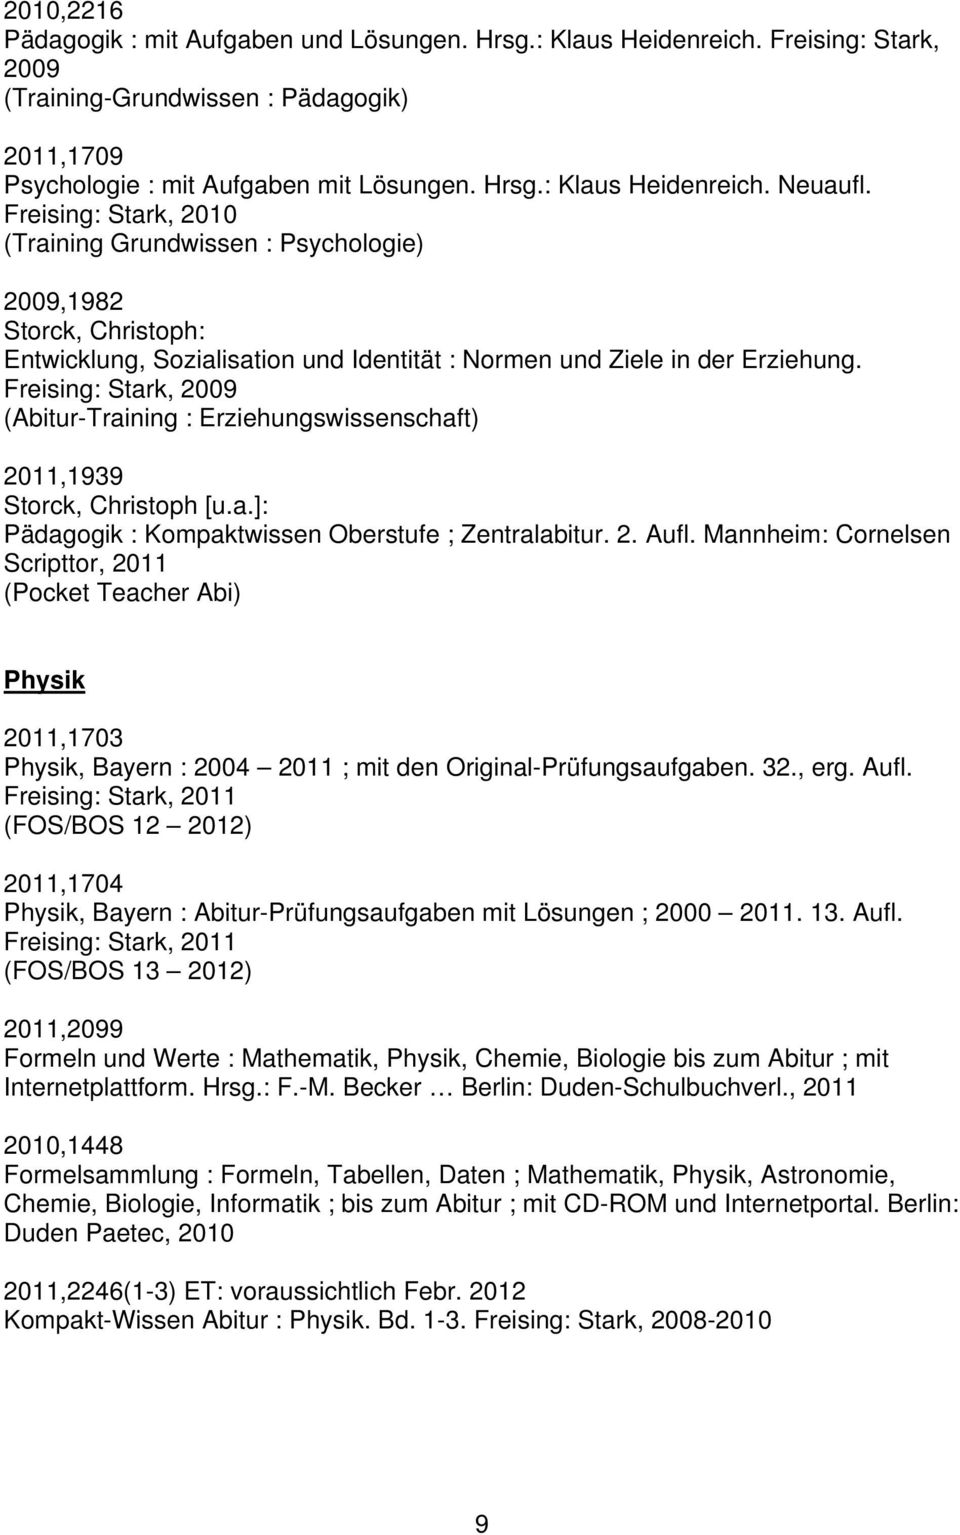 Freising: Stark, 2009 (Abitur-Training : Erziehungswissenschaft) 2011,1939 Storck, Christoph [u.a.]: Pädagogik : Kompaktwissen Oberstufe ; Zentralabitur. 2. Aufl.